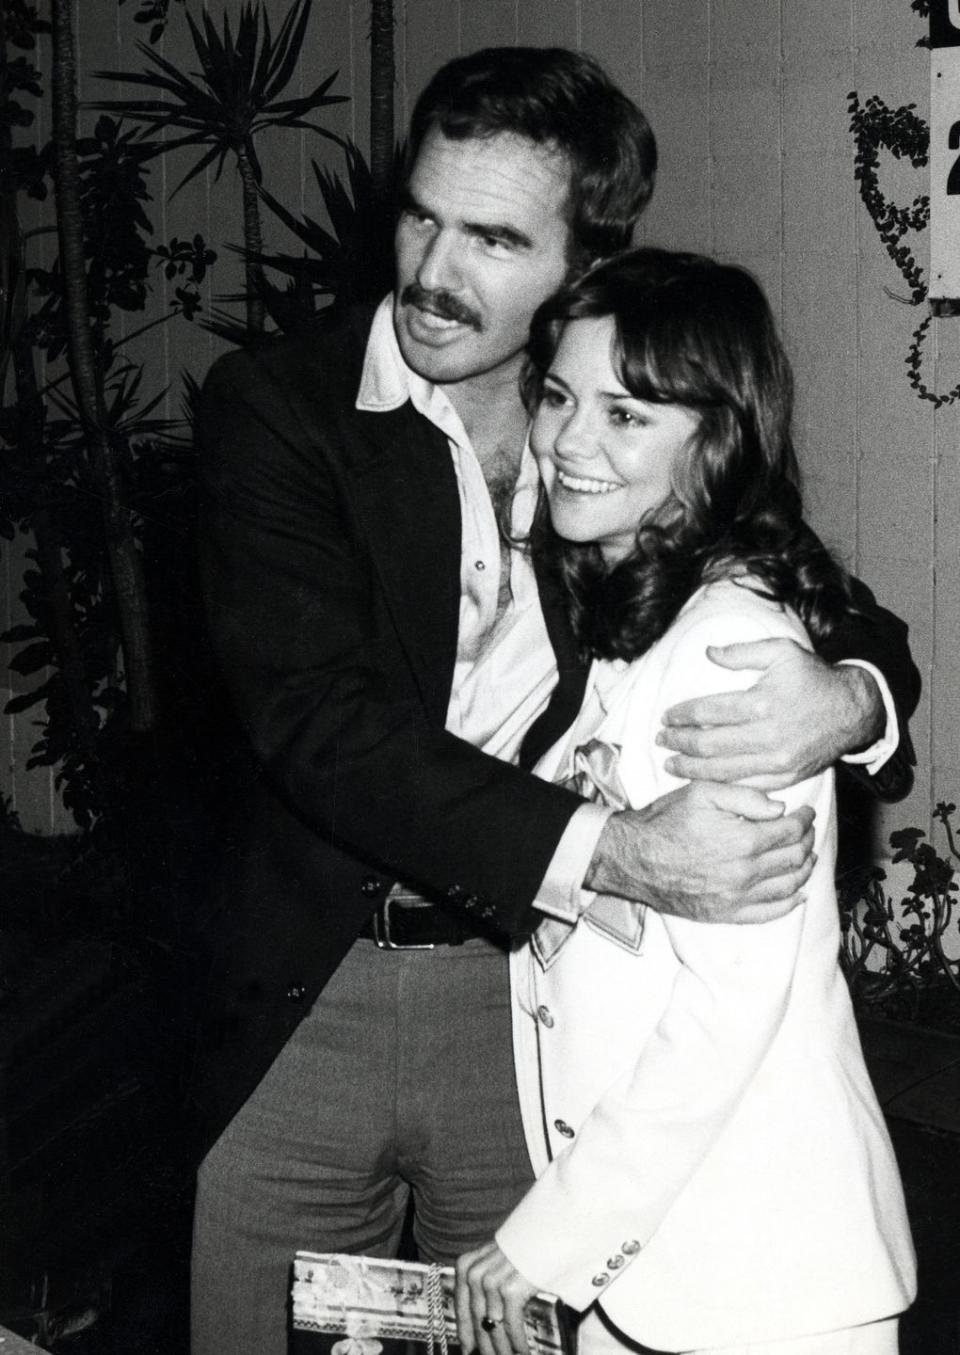 Sally Field and Burt Reynolds